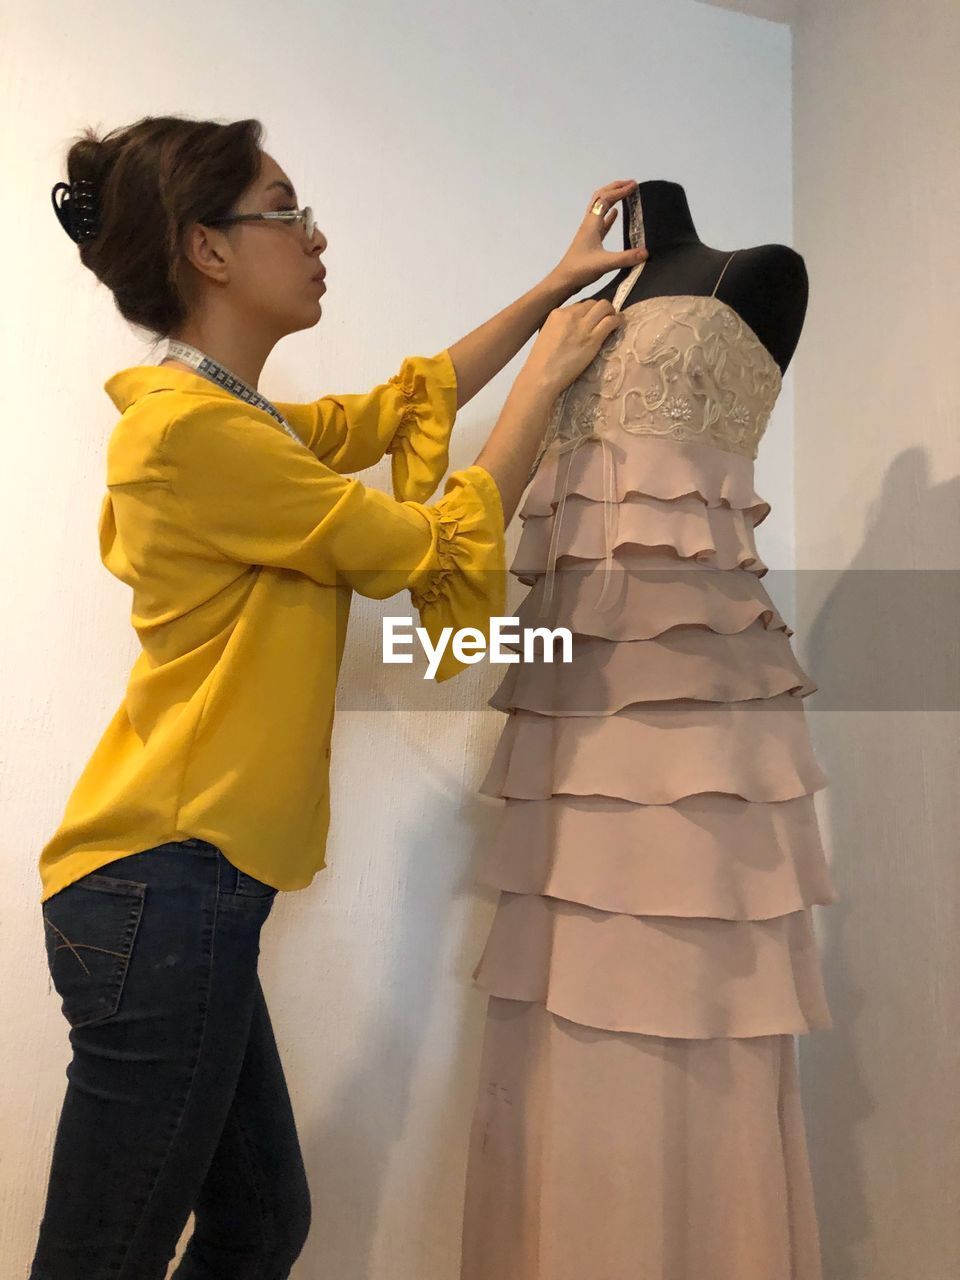 Fashion designer measuring mannequin neck in store